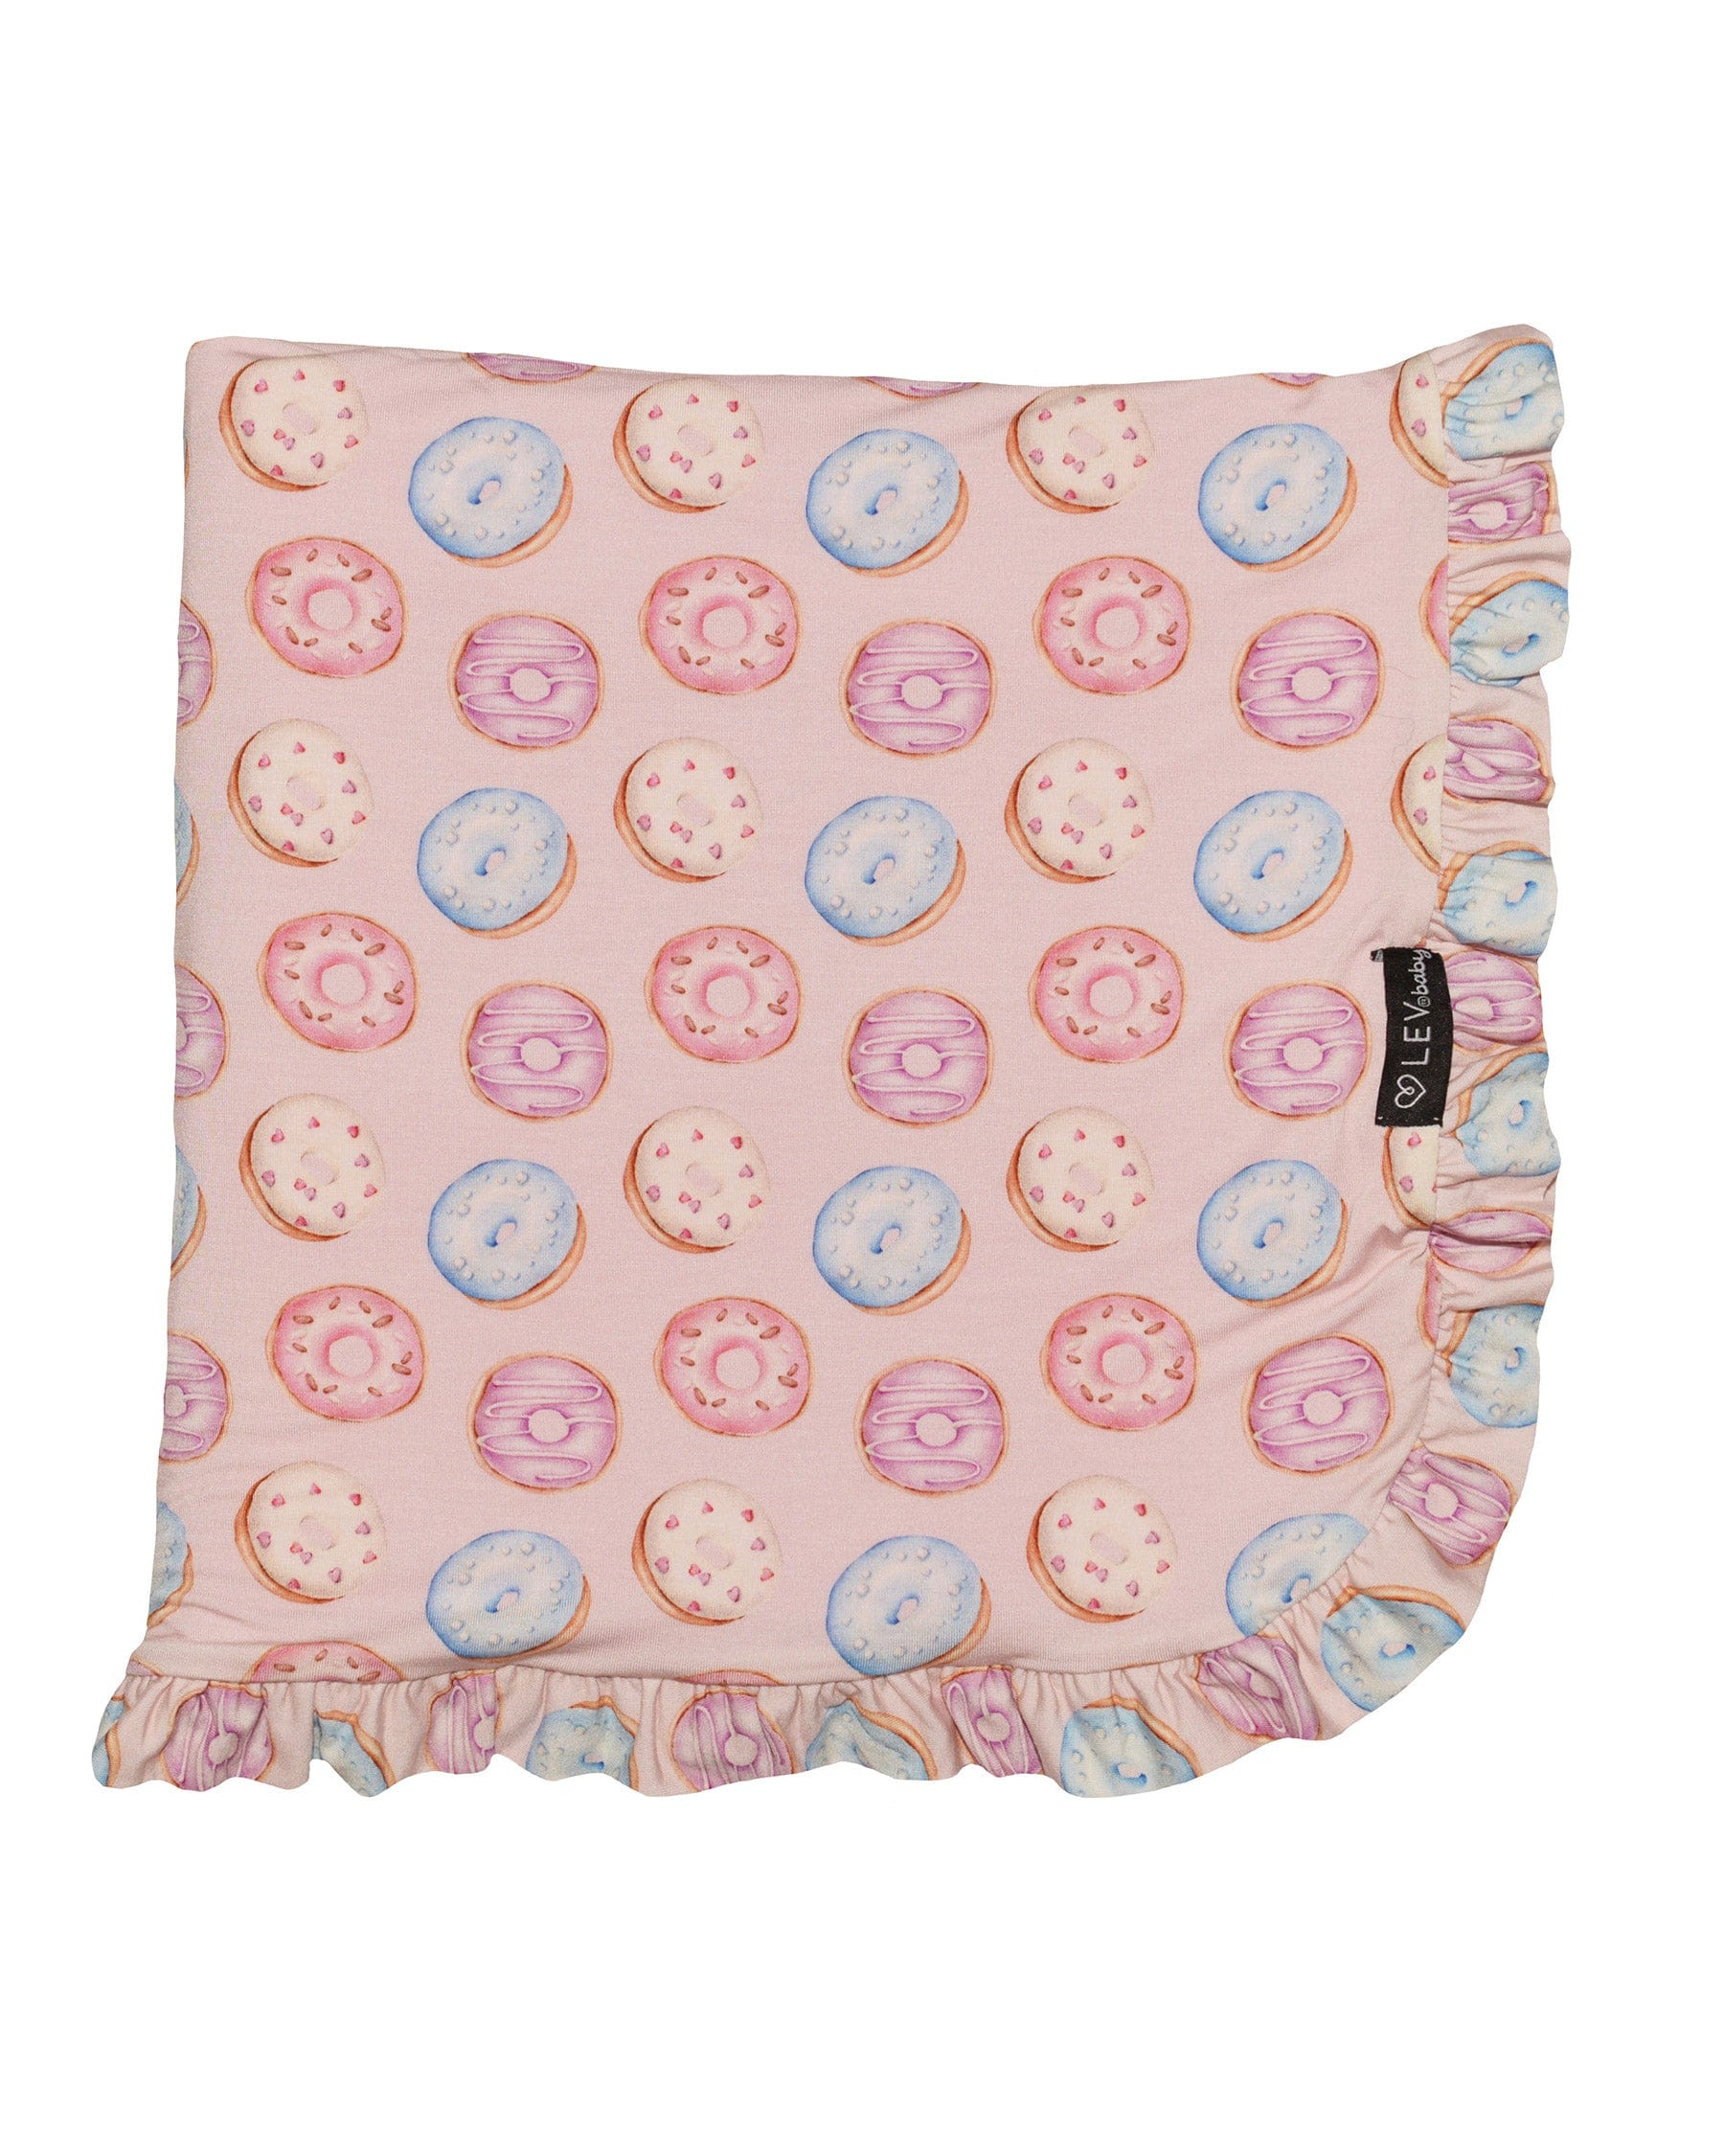 Donuts Ruffled Blanket